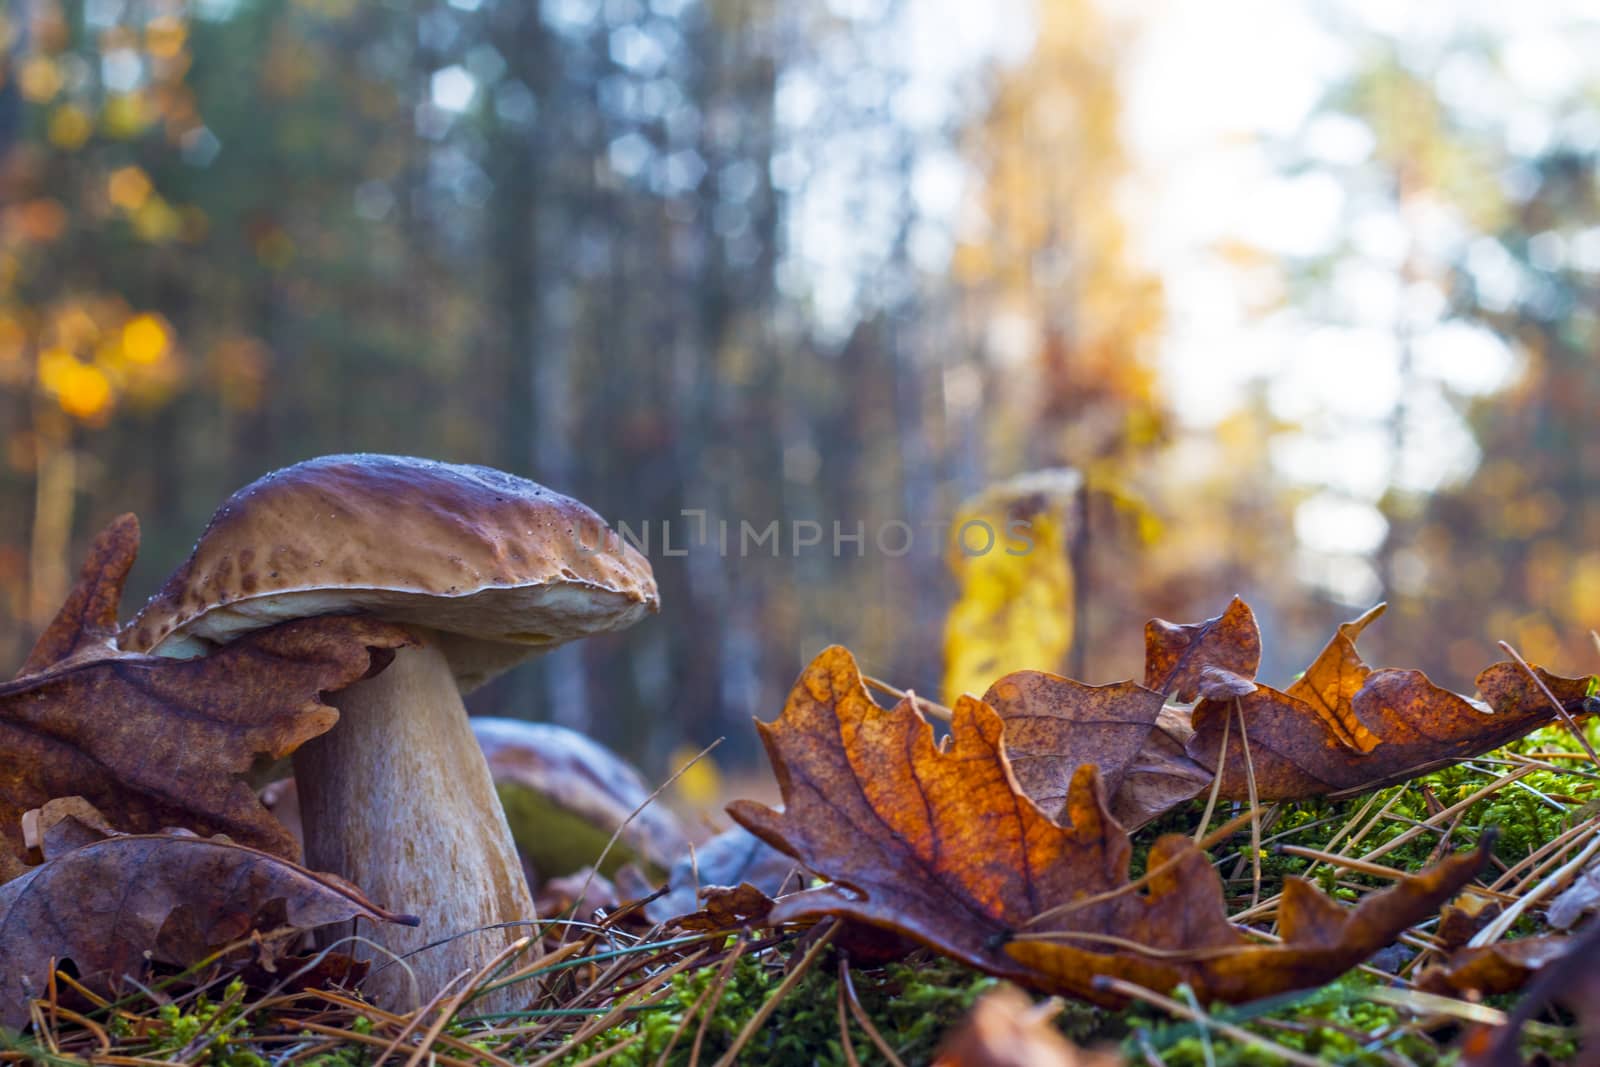 big mushroom in morning wood. Autumn mushrooms grow. Natural raw food growing in forest. Edible cep, vegetarian natural organic meal